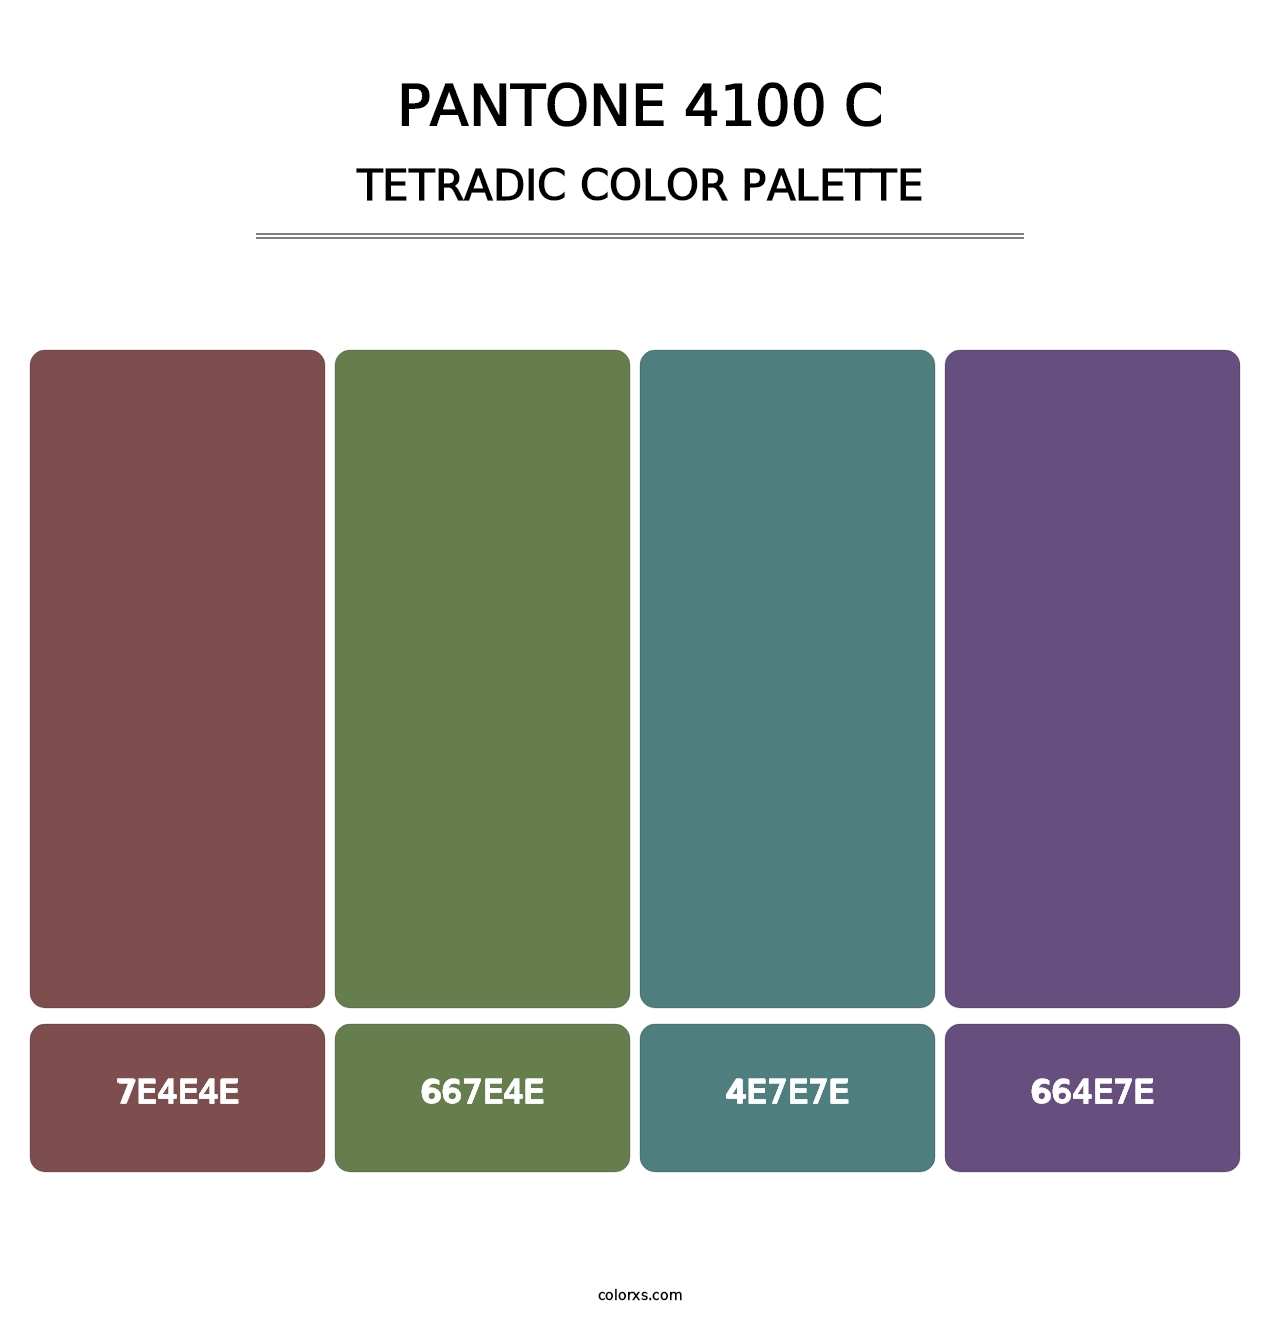 PANTONE 4100 C - Tetradic Color Palette